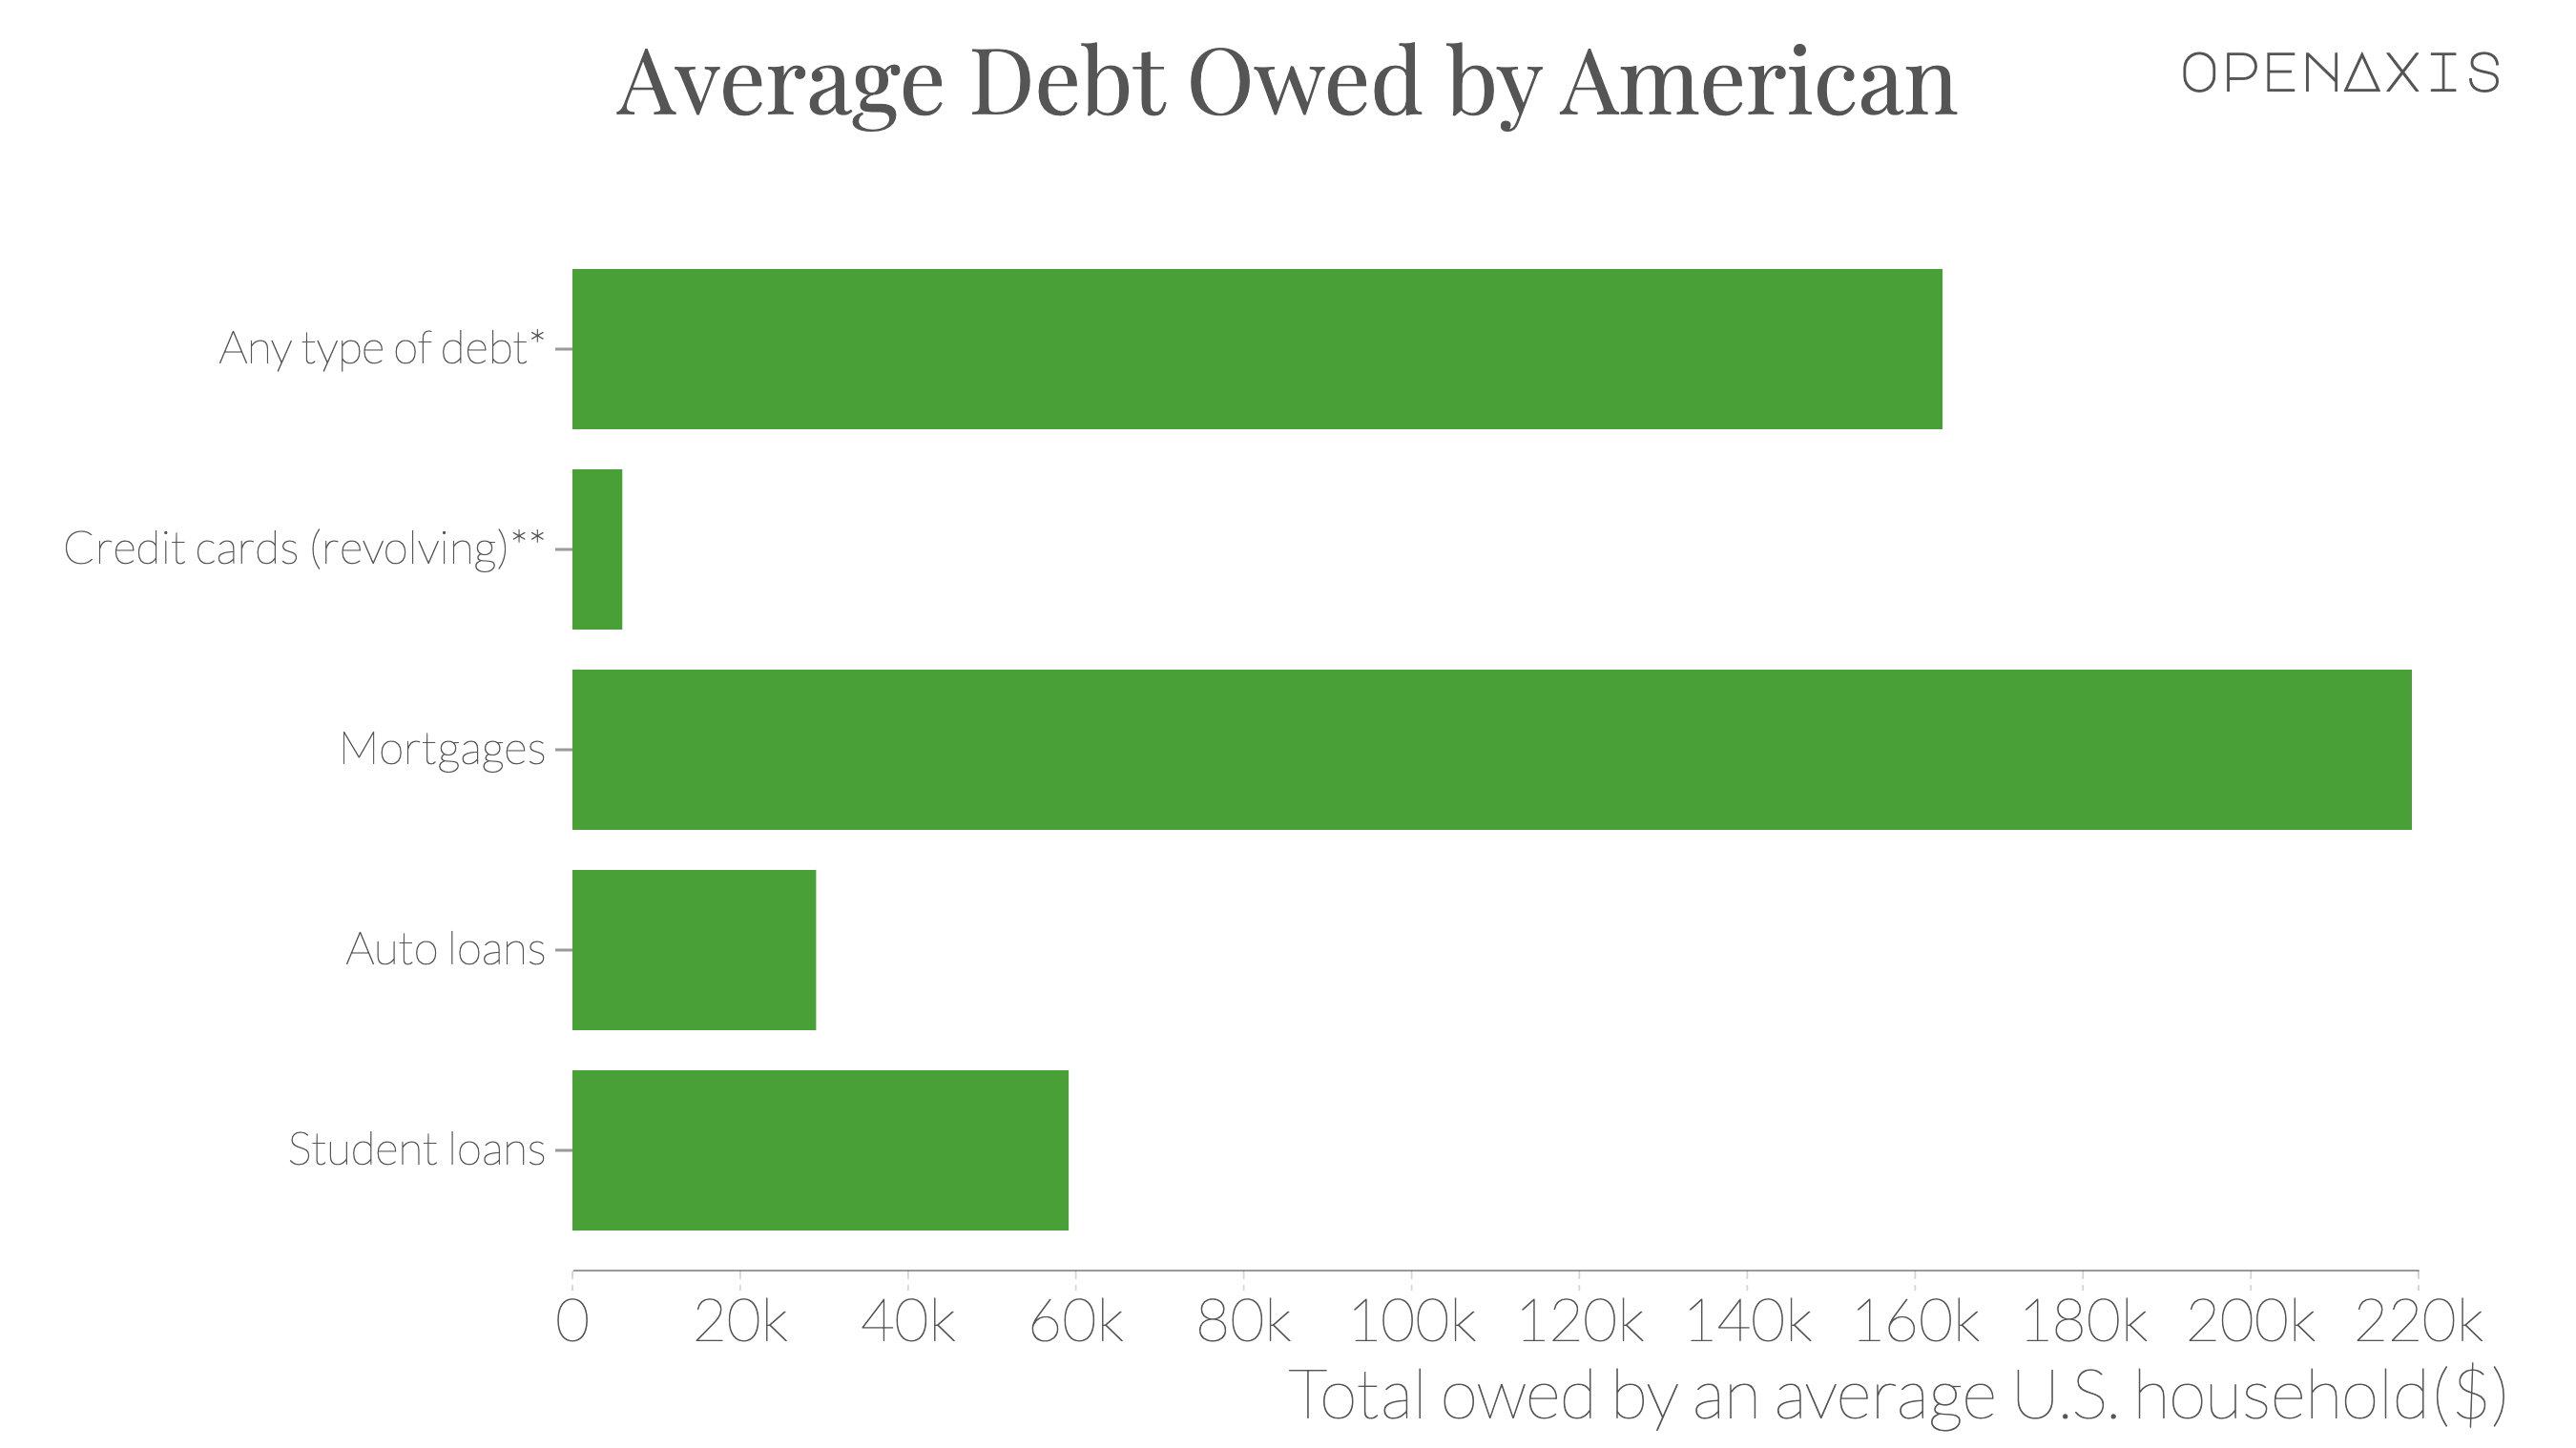 "Average Debt Owed by American"